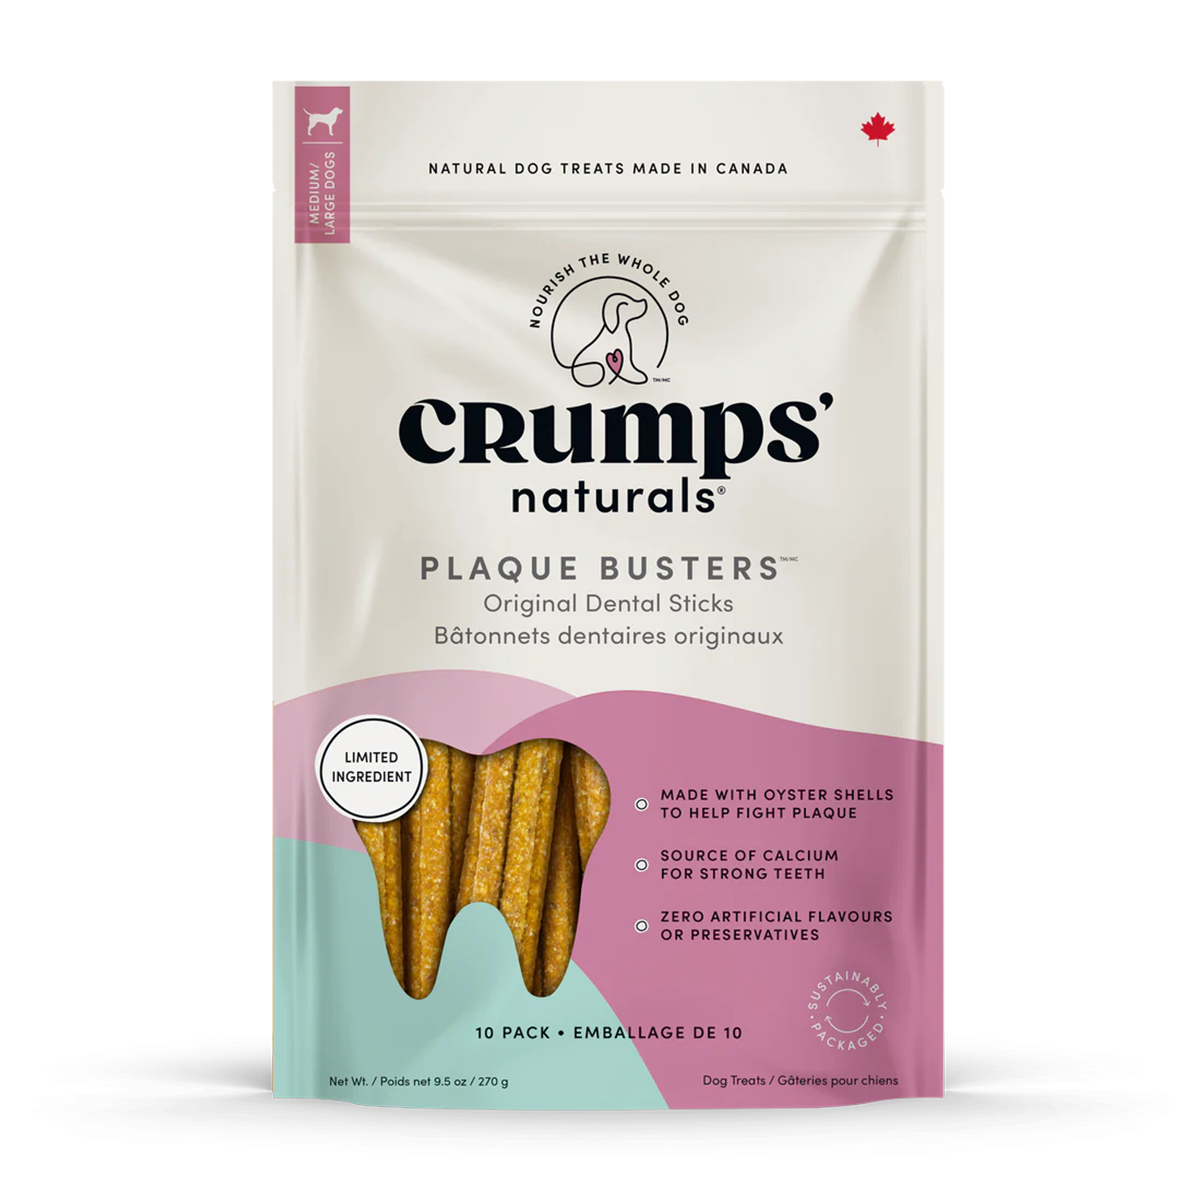 Crumps' Naturals Plaque Busters Dental Sticks Dog Treat - Original